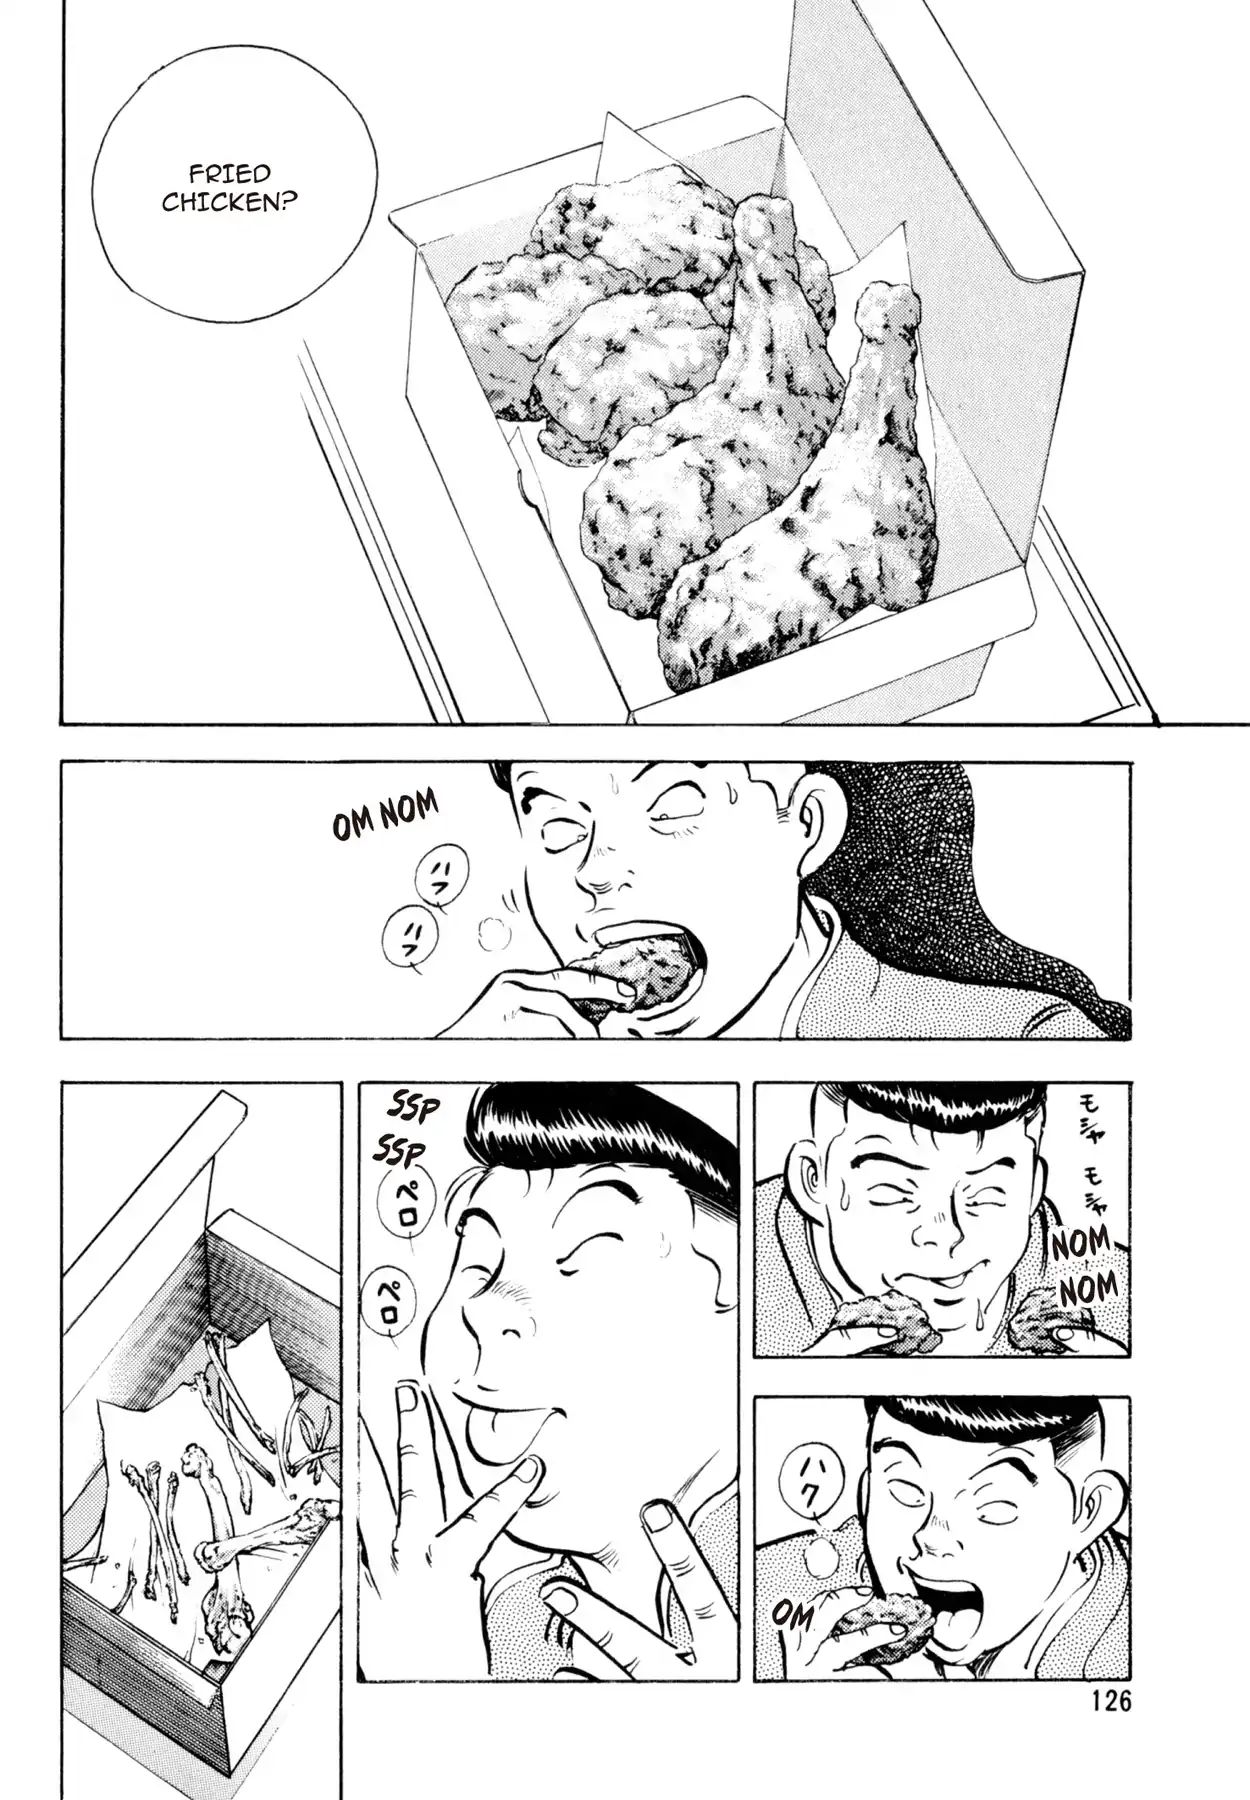 Shoku King VOL.1 CHAPTER 4: TOSHIZO'S TOUCH